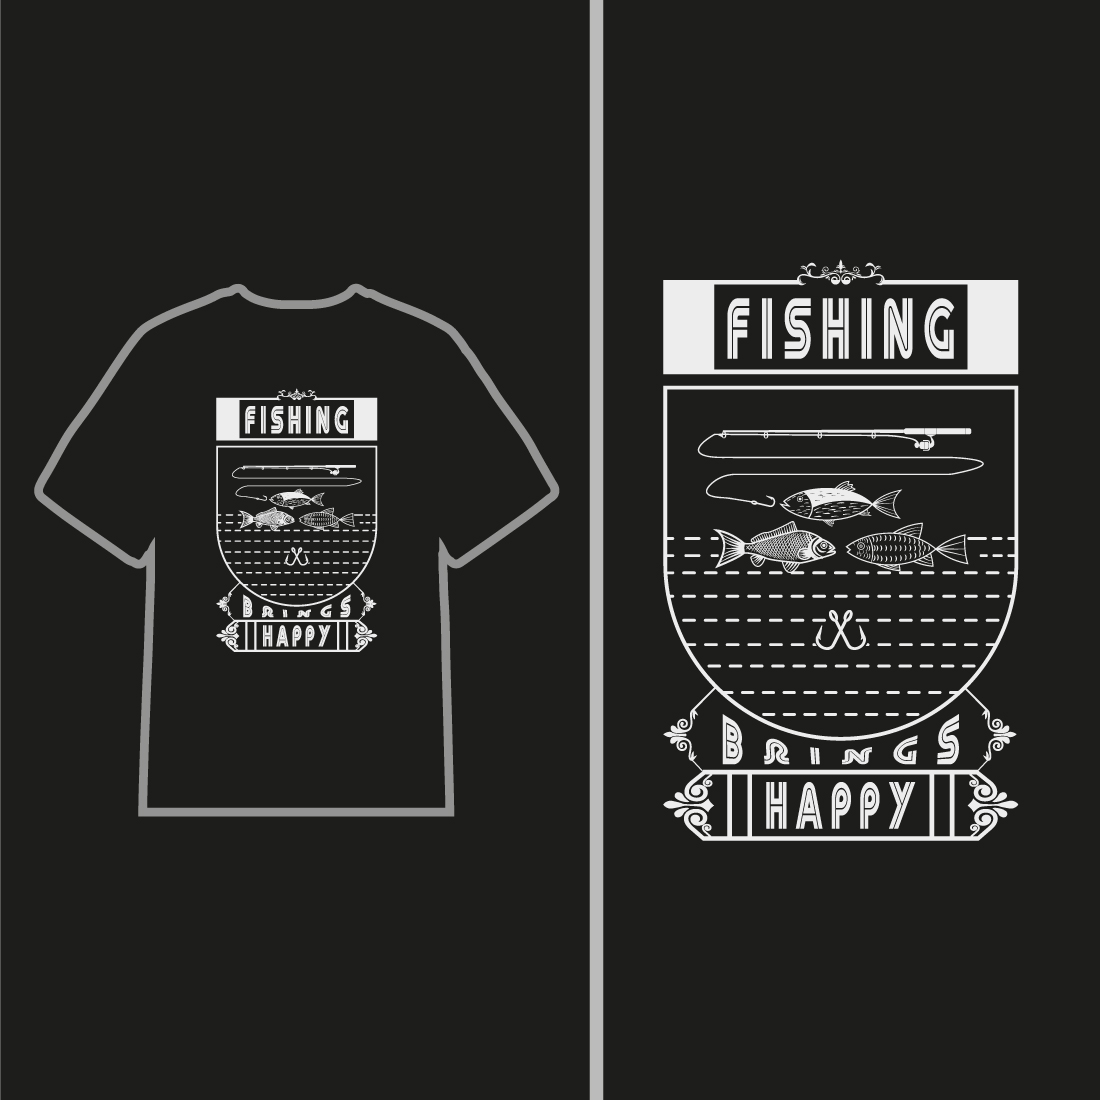 o2 fishing t-shirt designs preview image.